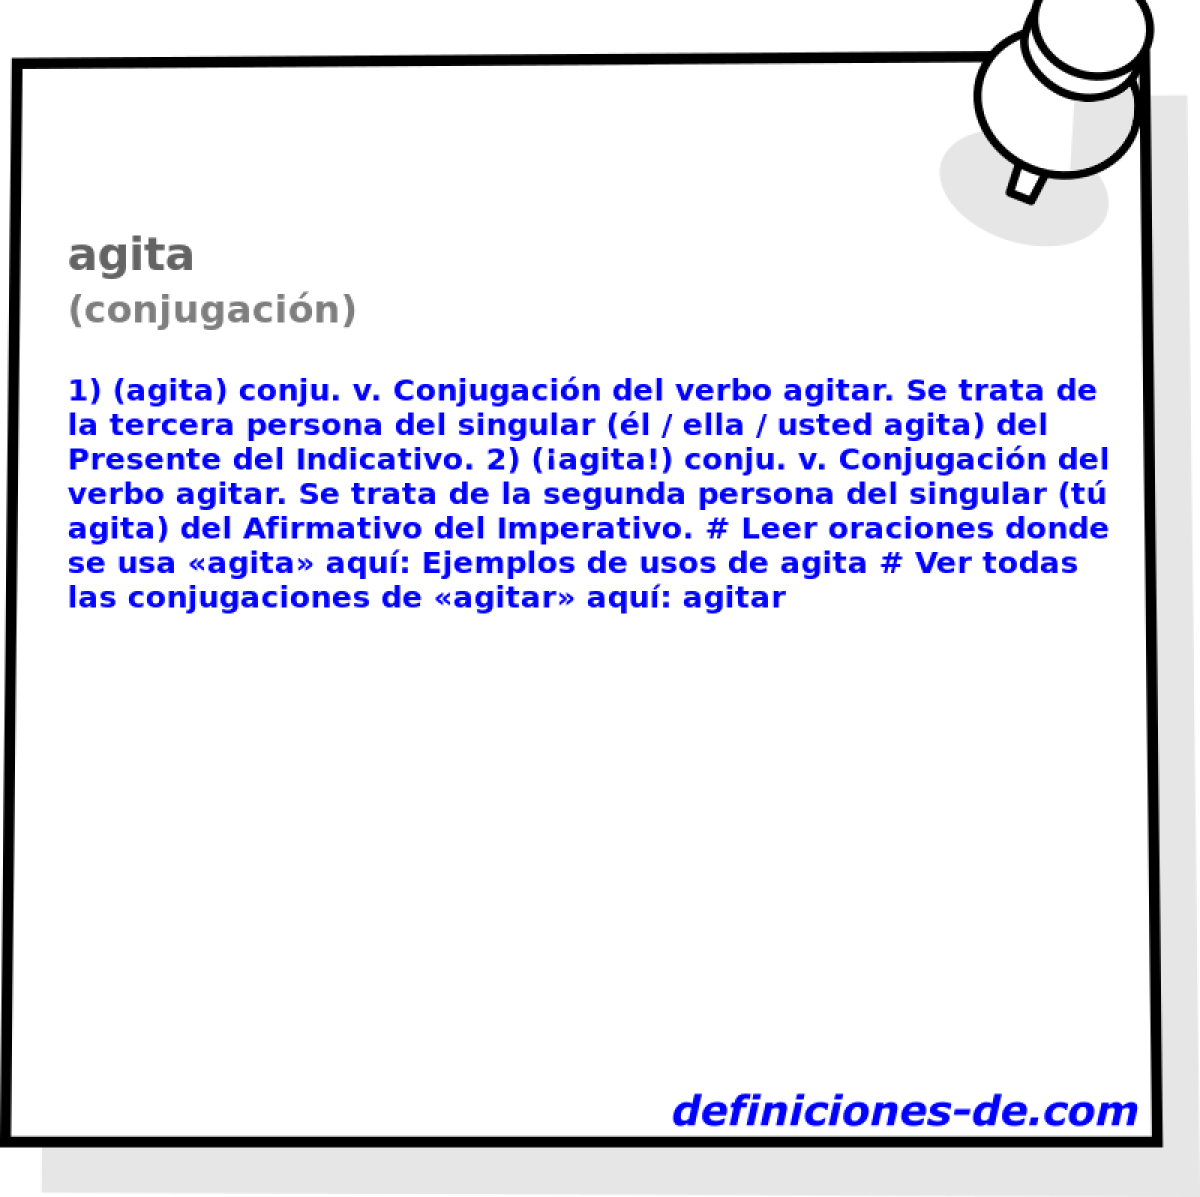 agita (conjugacin)